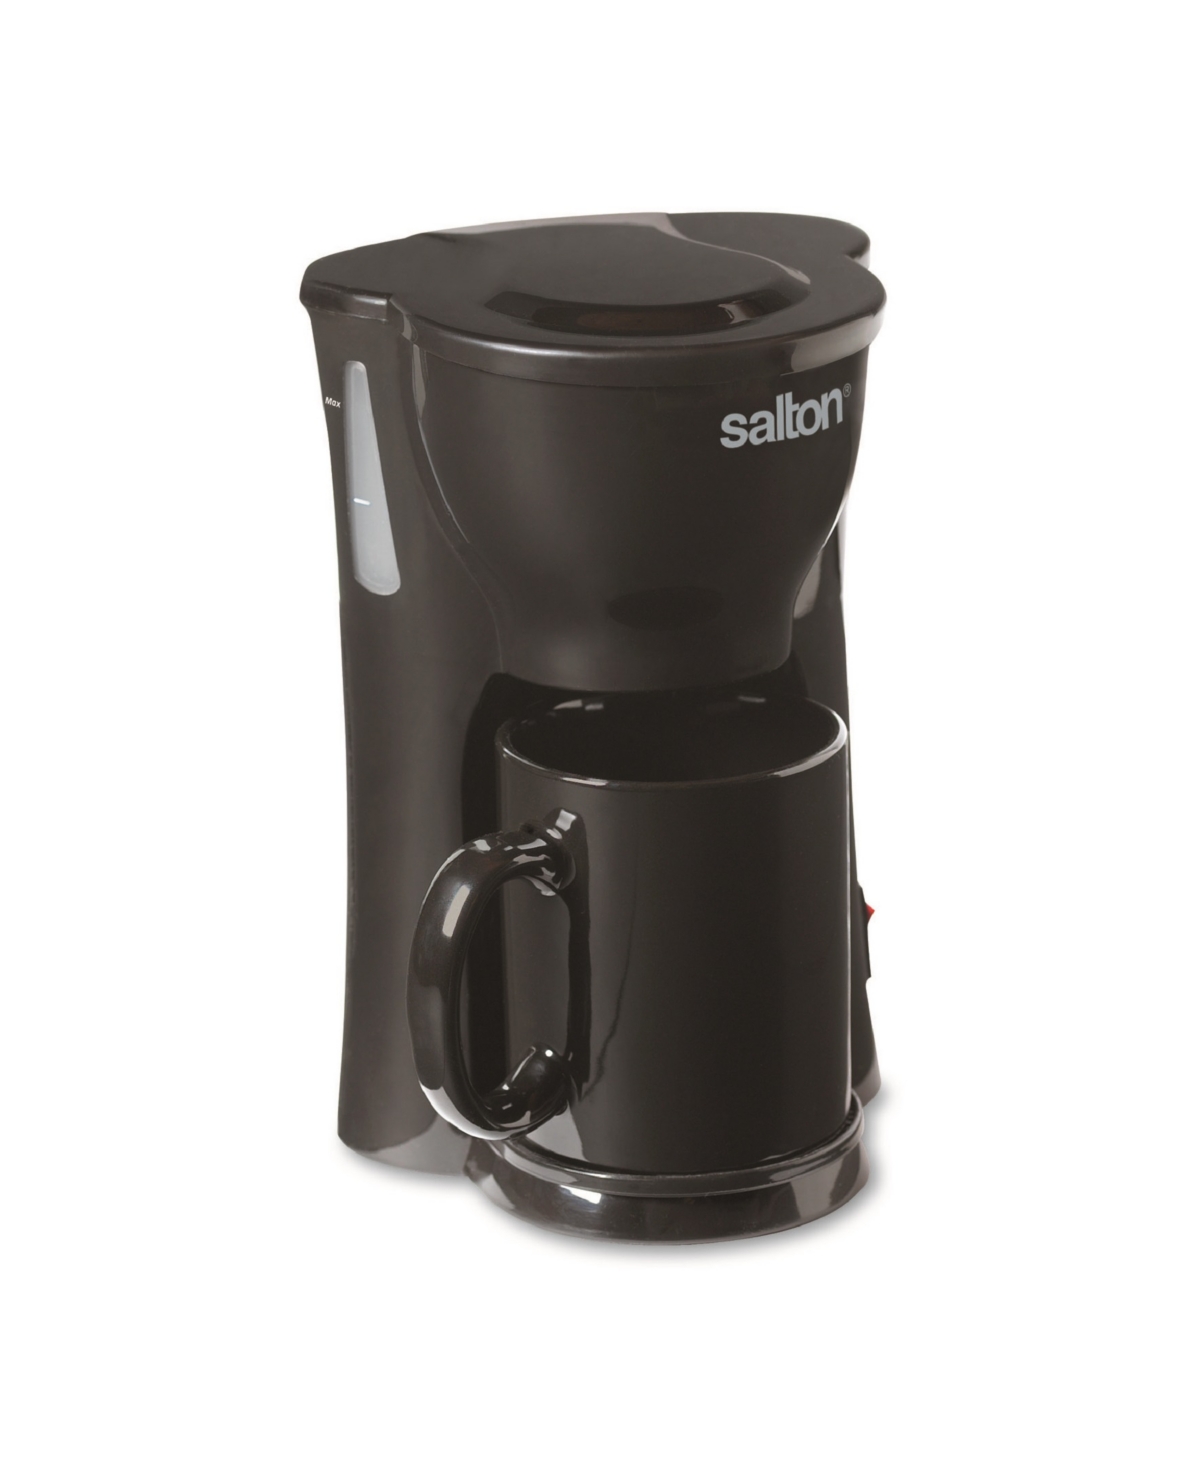 Salton Space Saving 1 cup Coffee Maker